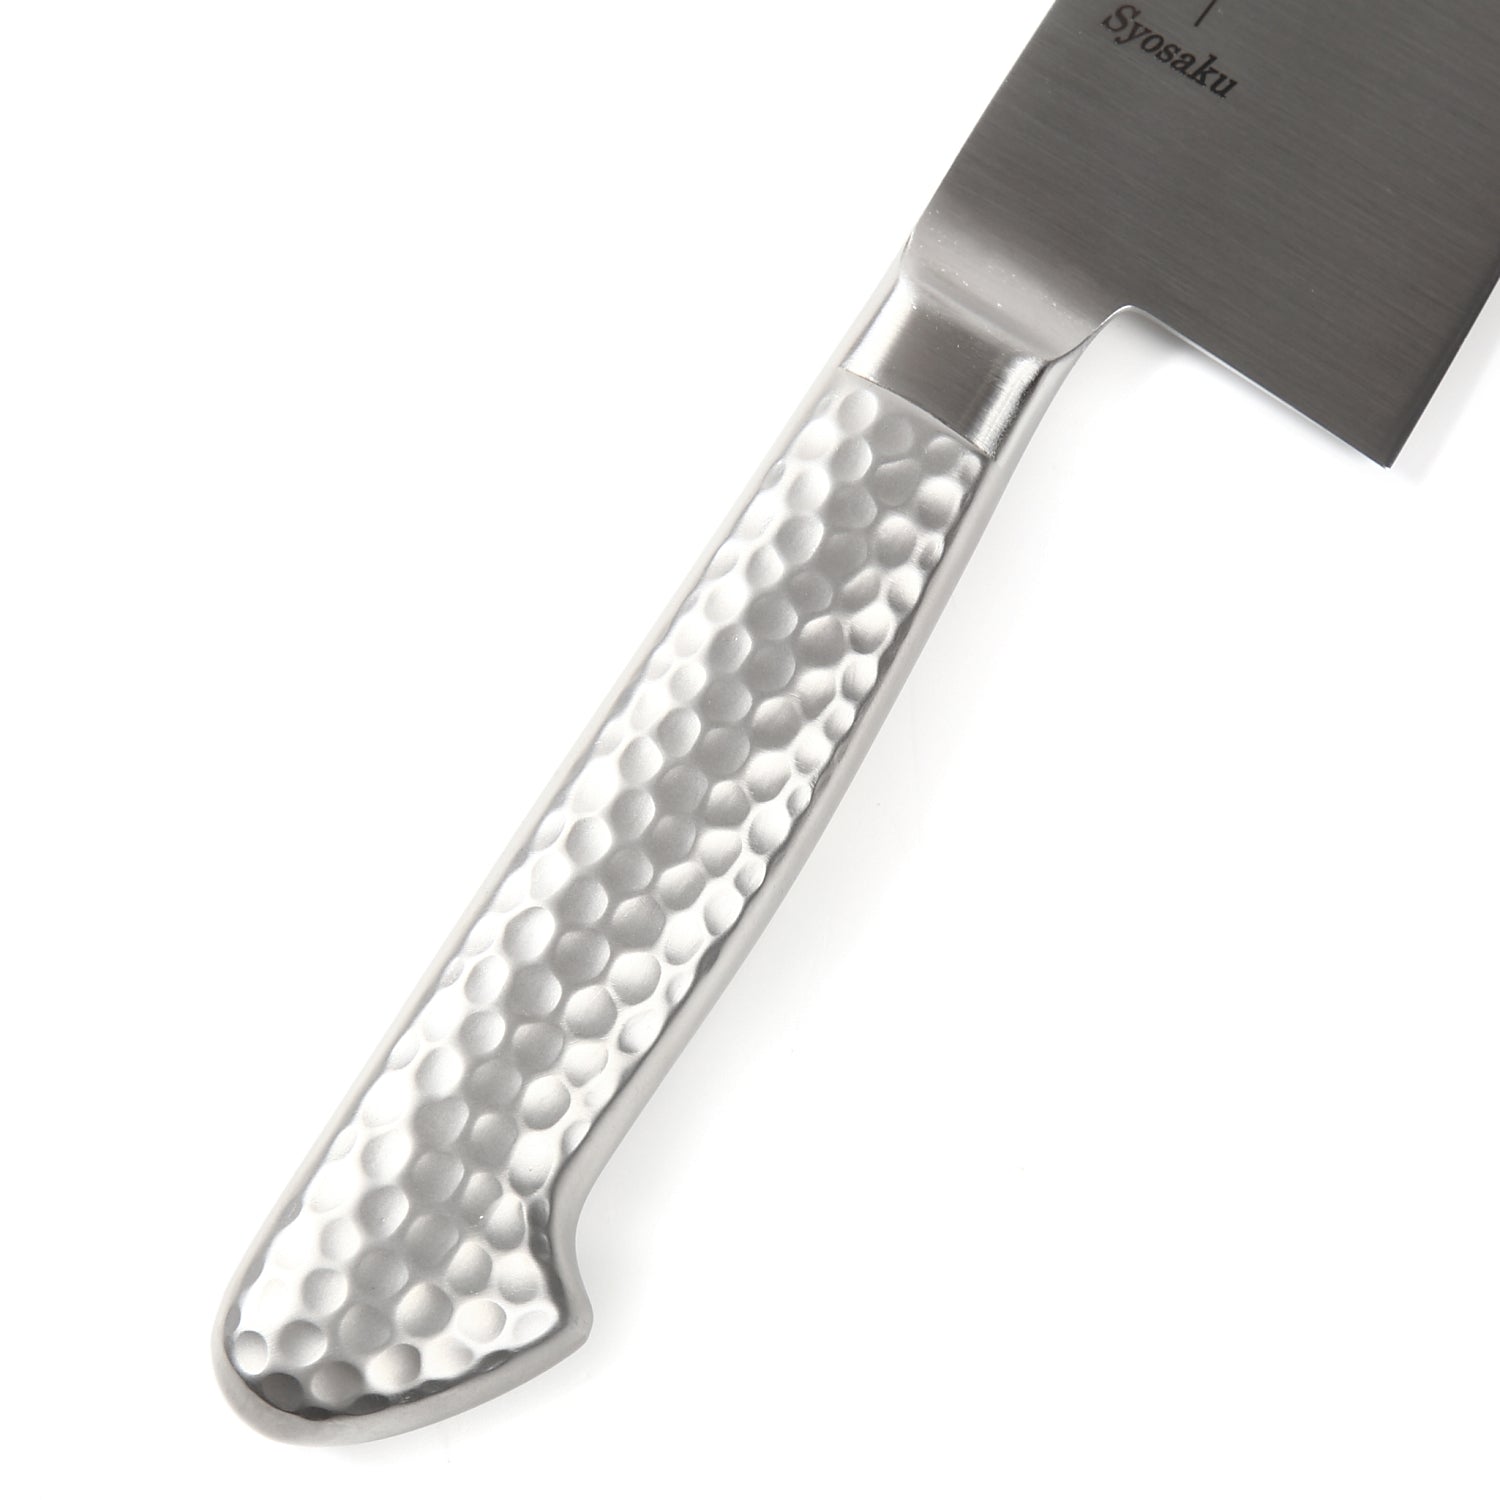 Syosaku Japanese Multi Purpose Best Sharp Kitchen Chef Knife INOX AUS-8A Stainless Steel Integrated Handle, Santoku 7-inch (180mm) - Syosaku-Japan